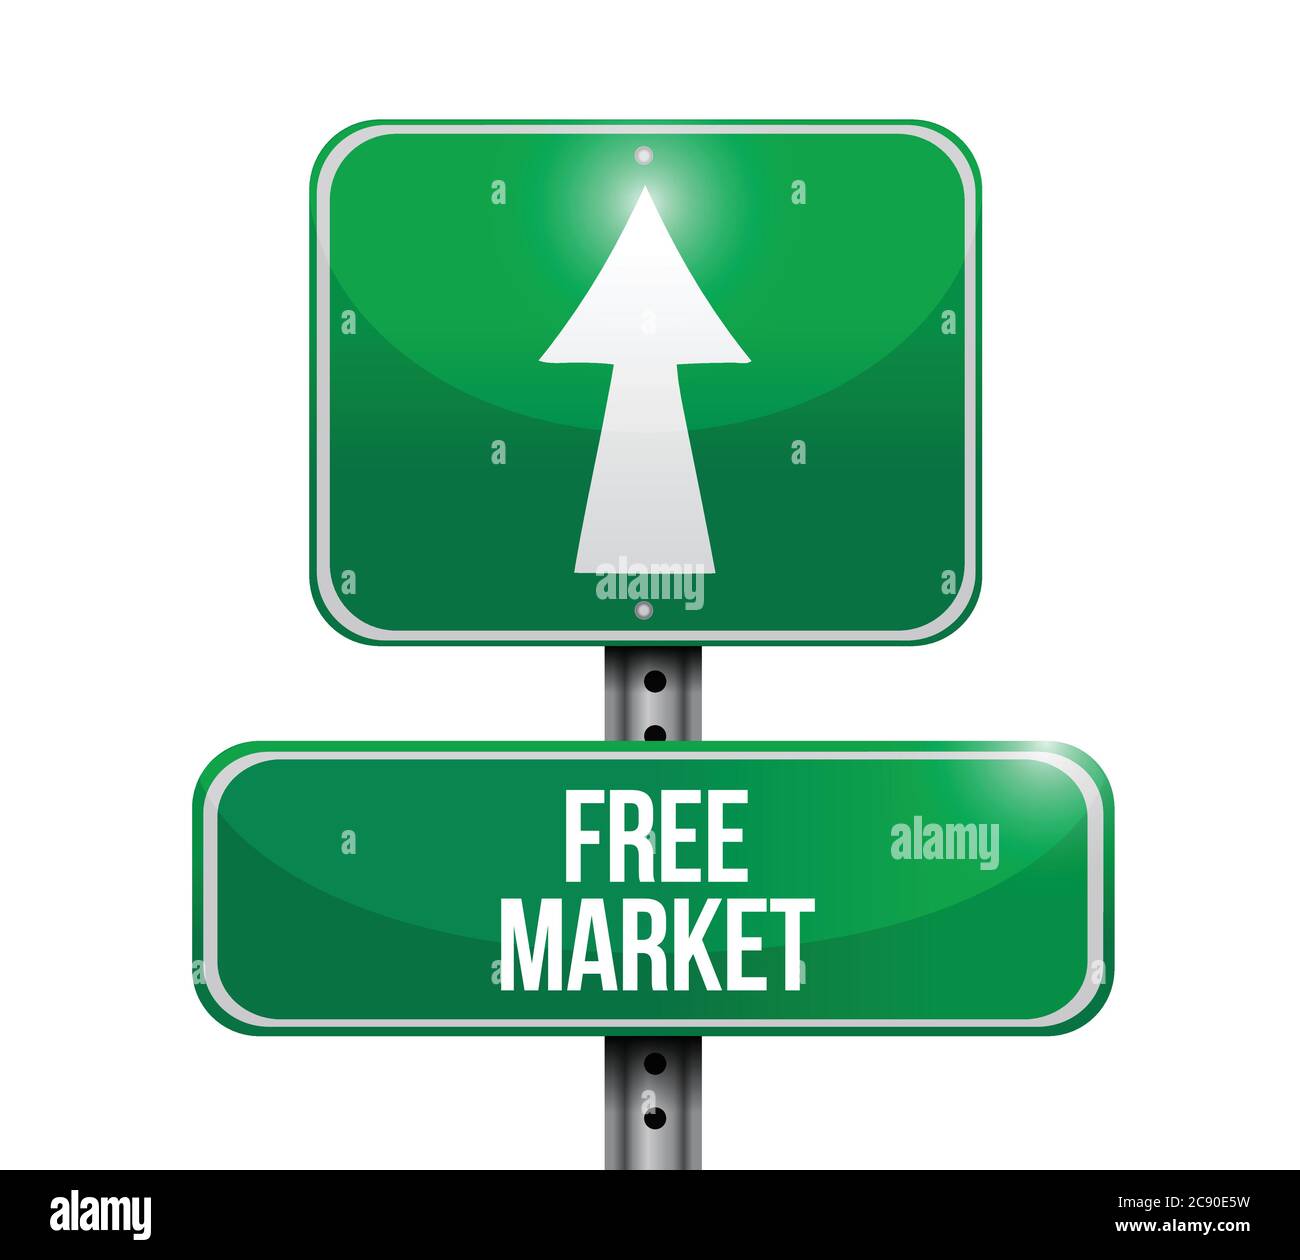 Free market street sign illustration design over a white background Stock Vector